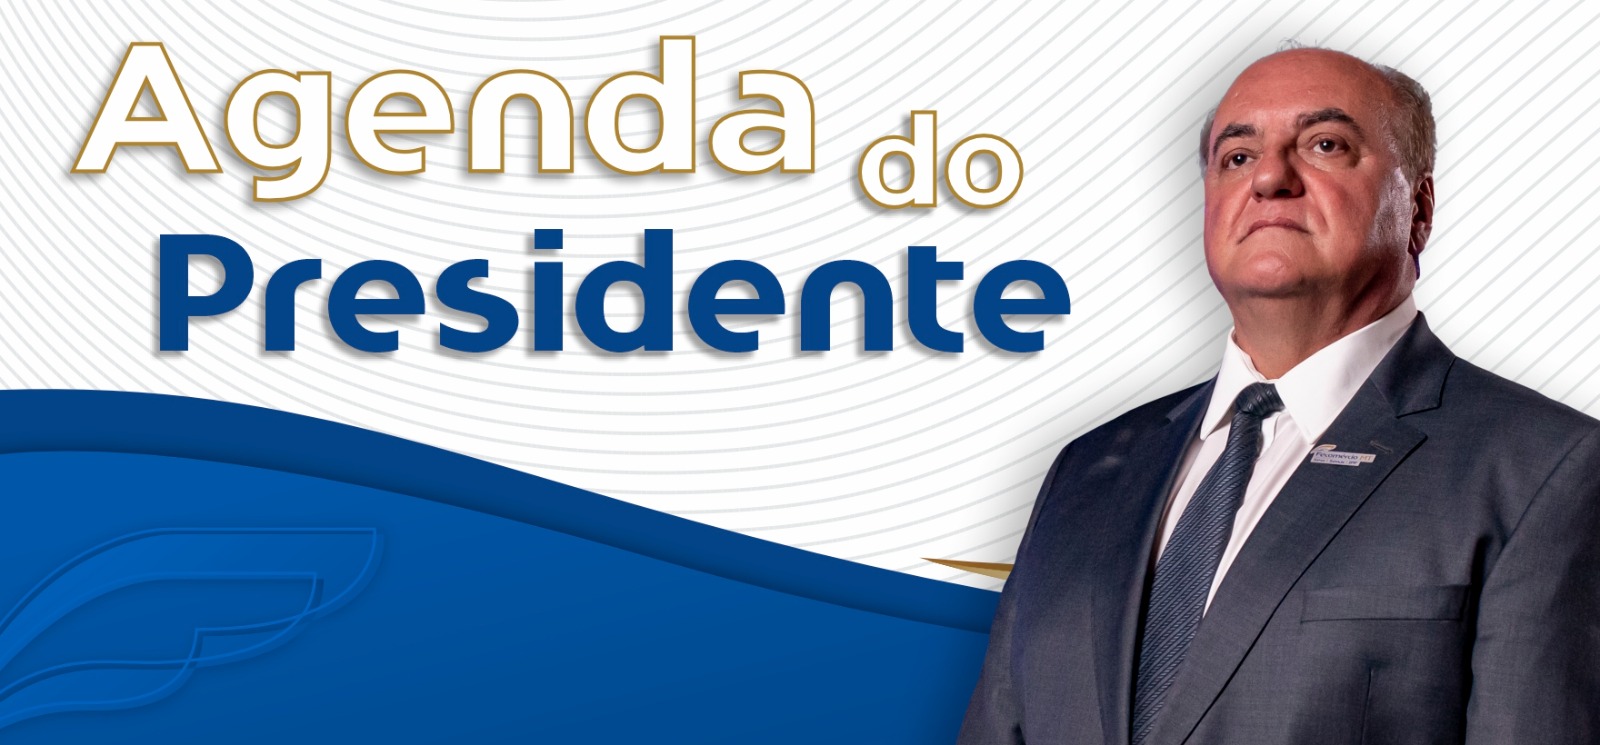 Agenda do Presidente - José Wenceslau de Souza Júnior